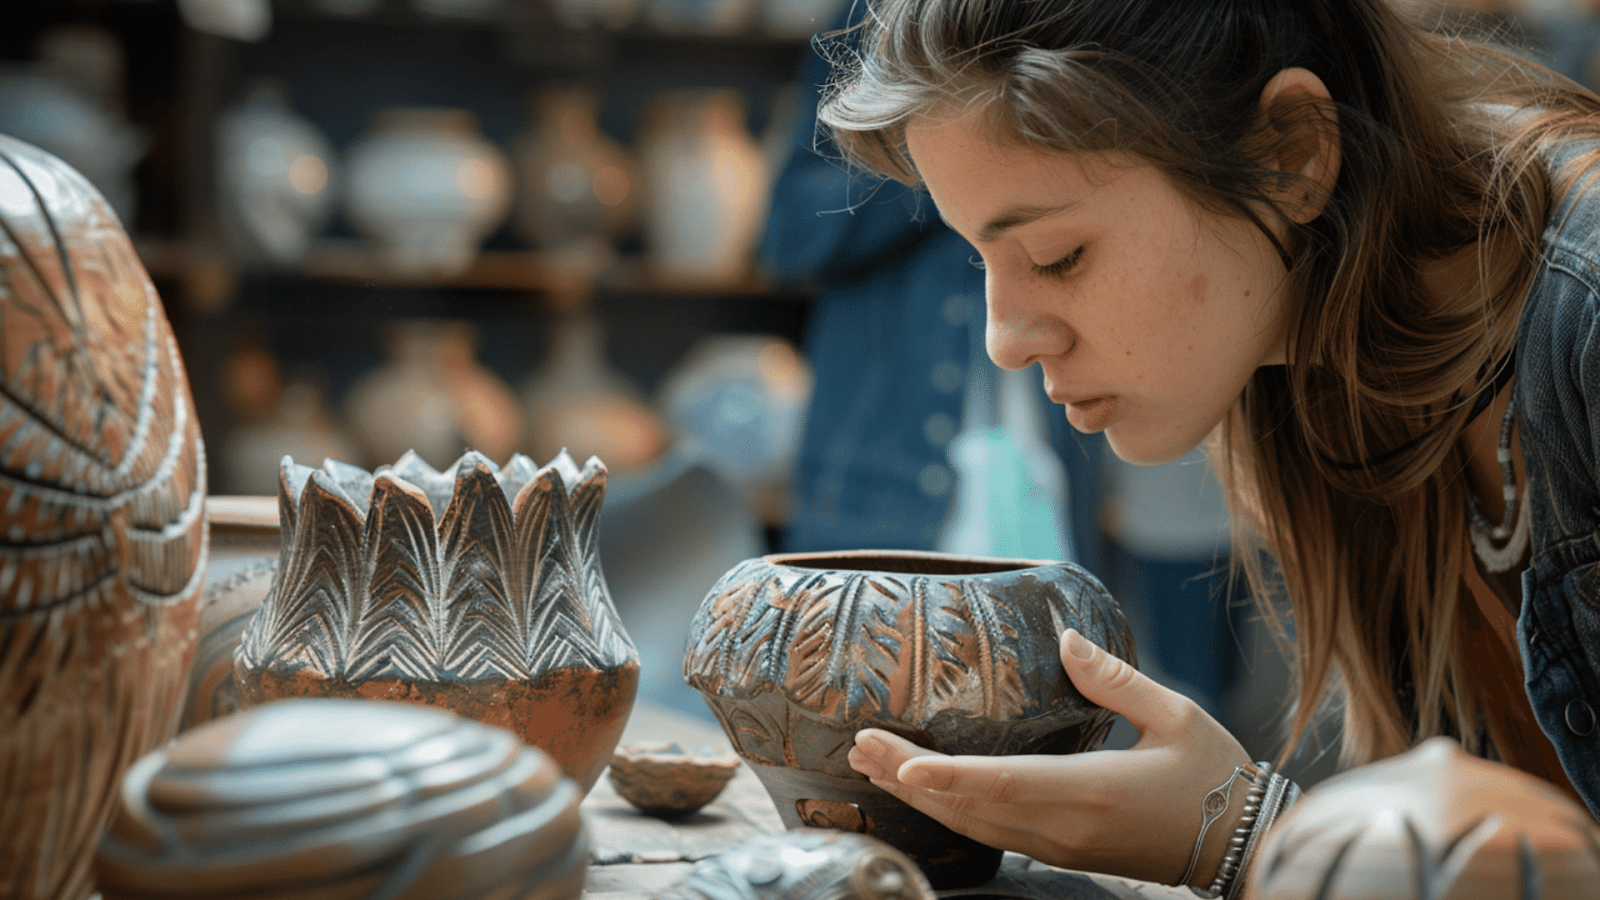 A woman examining handmade pottery at a craft stall.